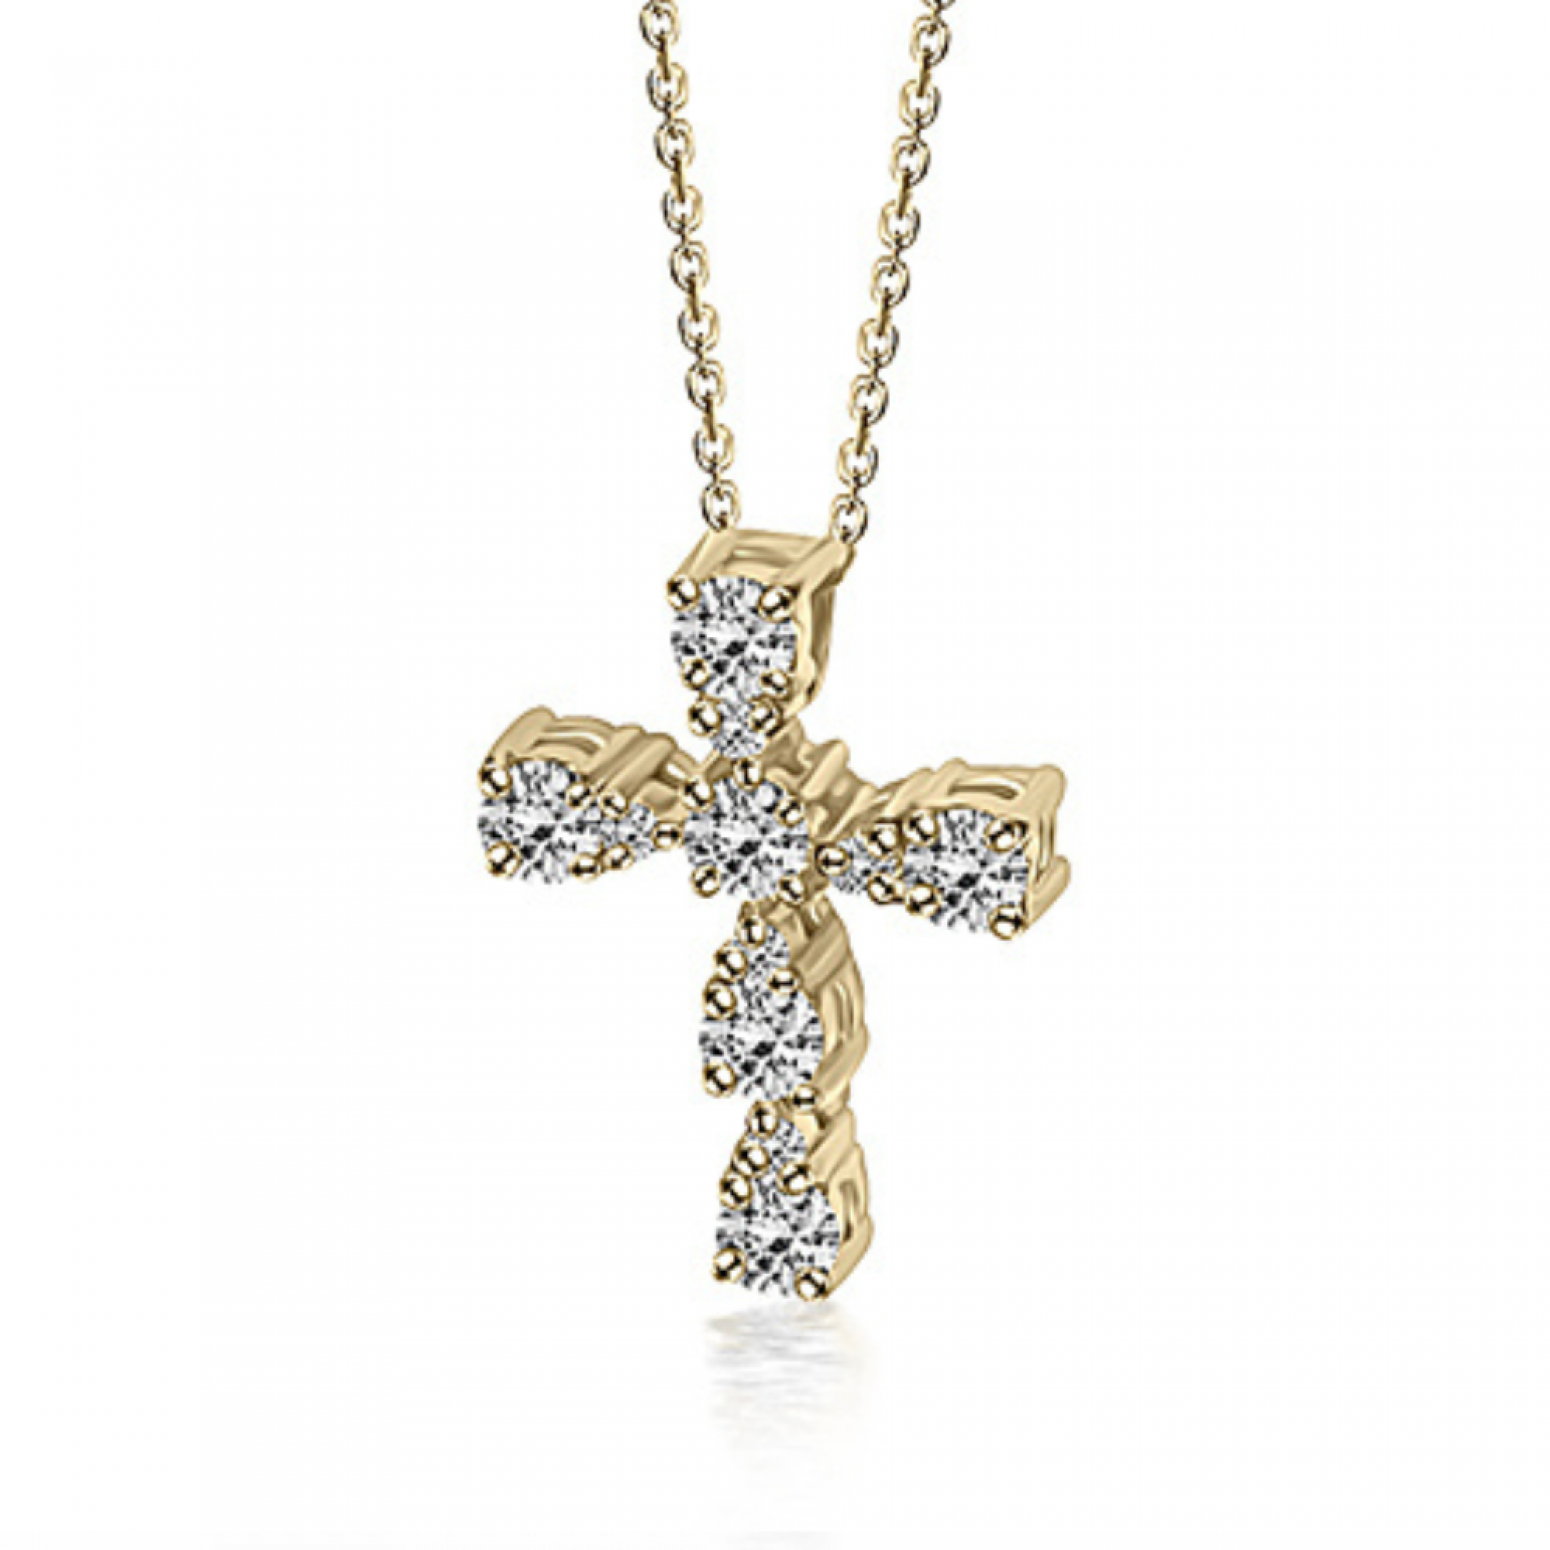 Baptism cross with chain K14 gold with diamonds 0.29ct, VS2, H st4074 CROSSES Κοσμηματα - chrilia.gr